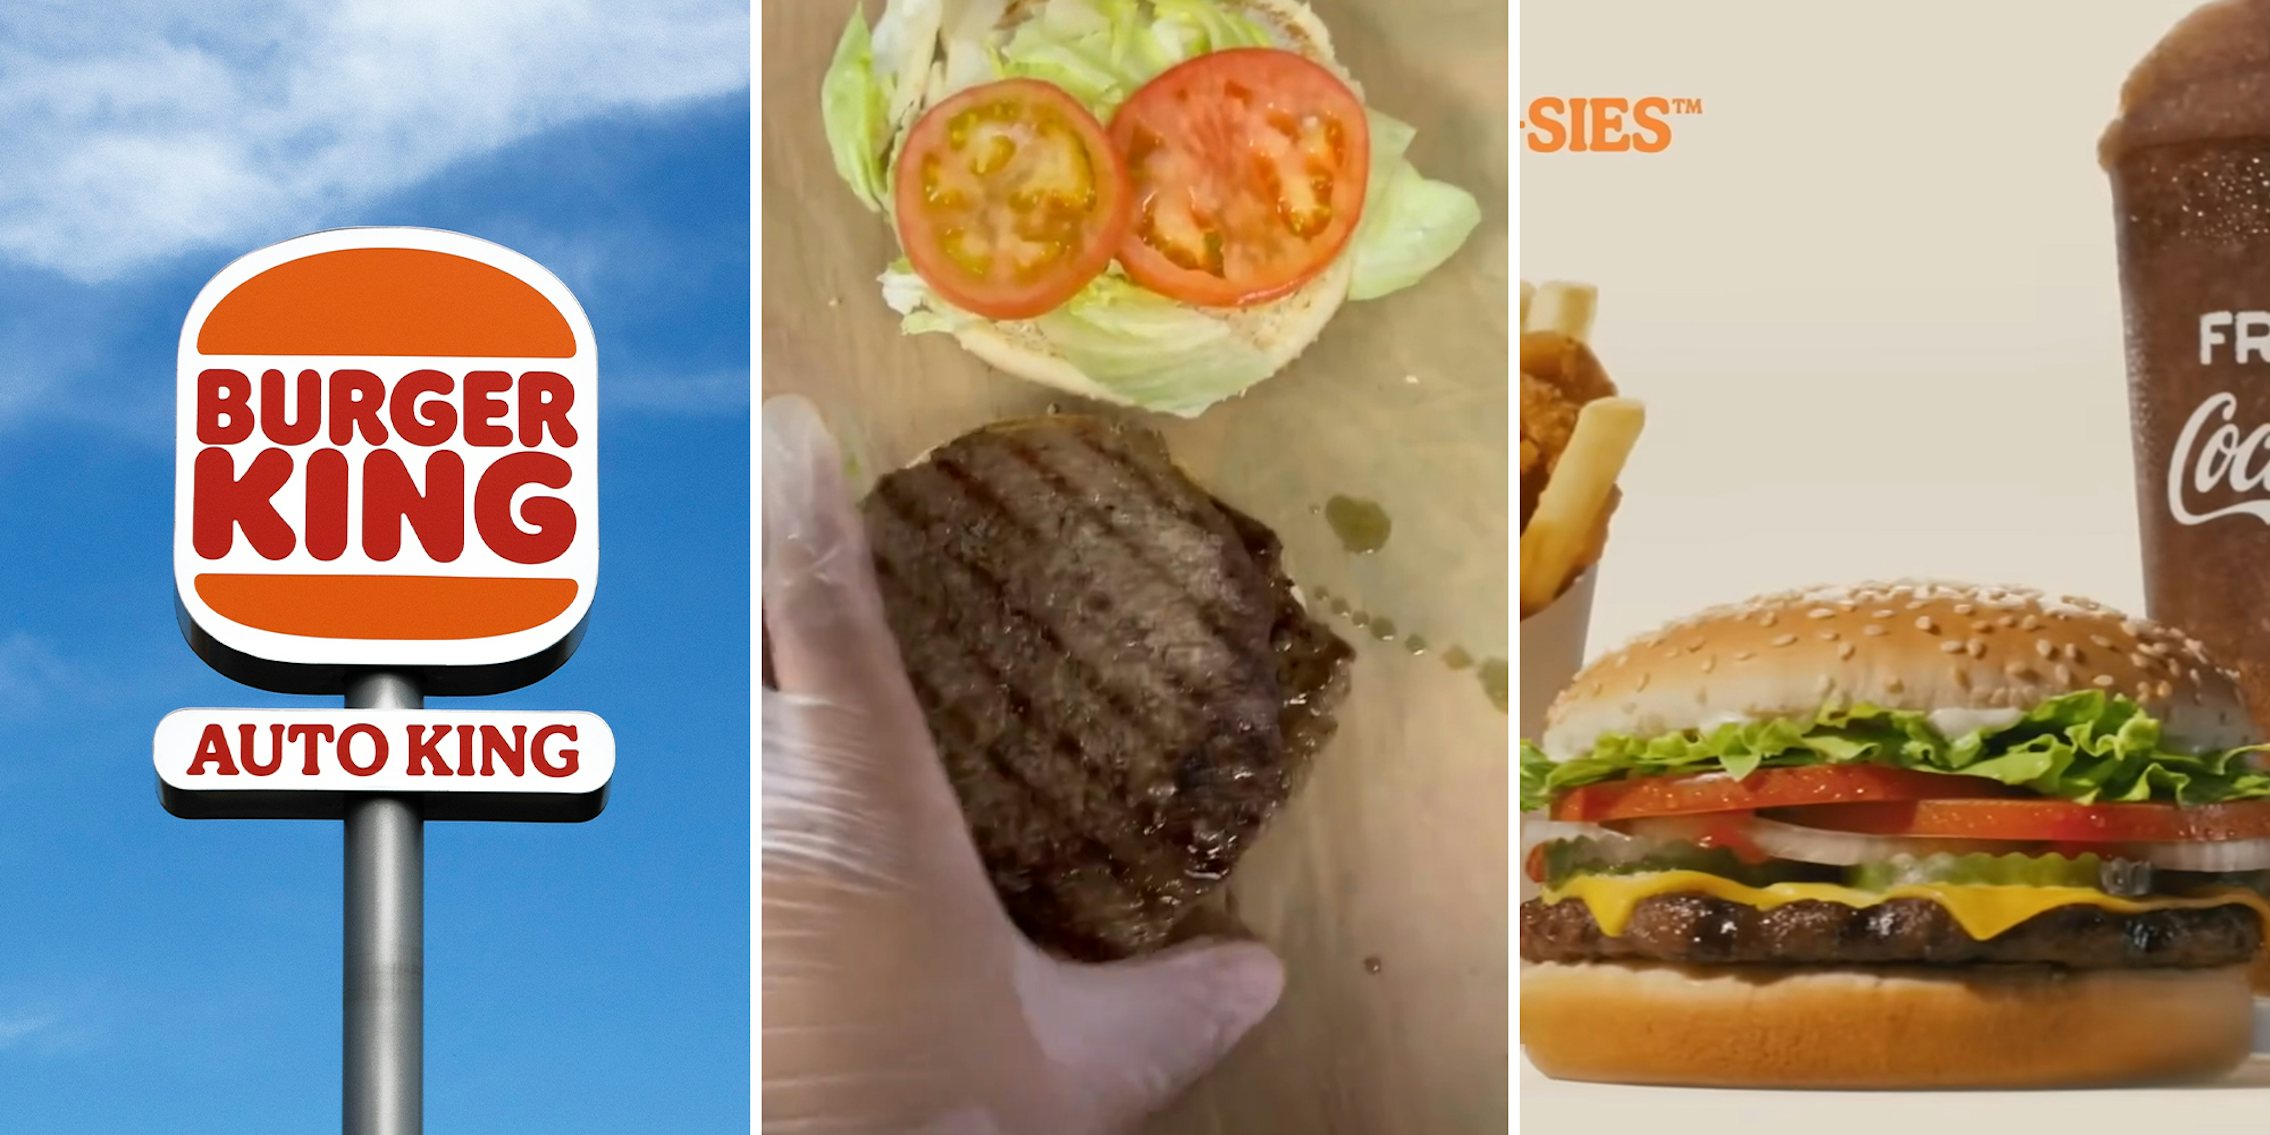 Burger King Road Sign; Worker Making Burger; Burger King Advertisement